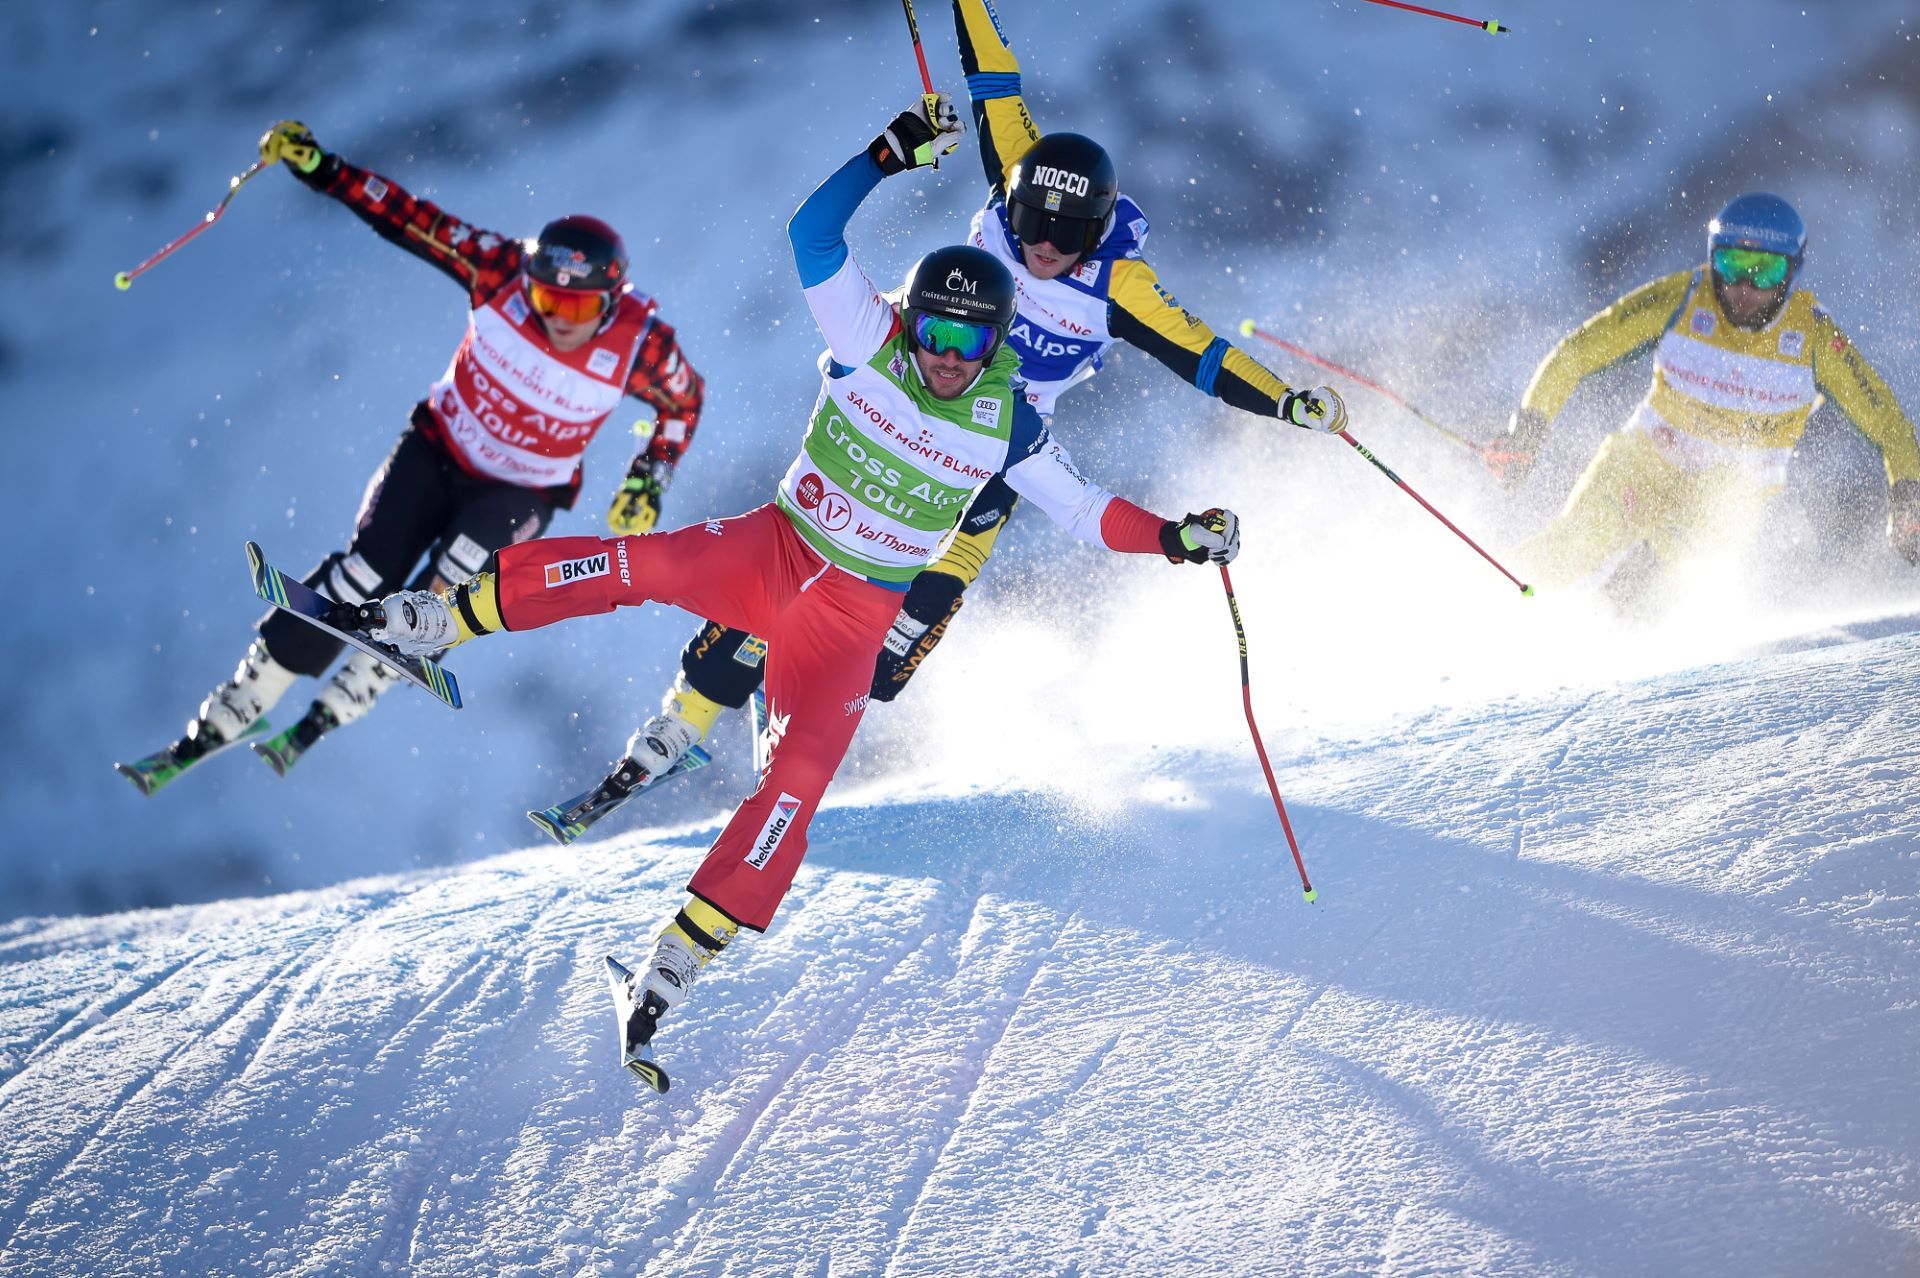 valthorens-skicross-montagne-3vallees-alpes-oxygene-ski-collection 